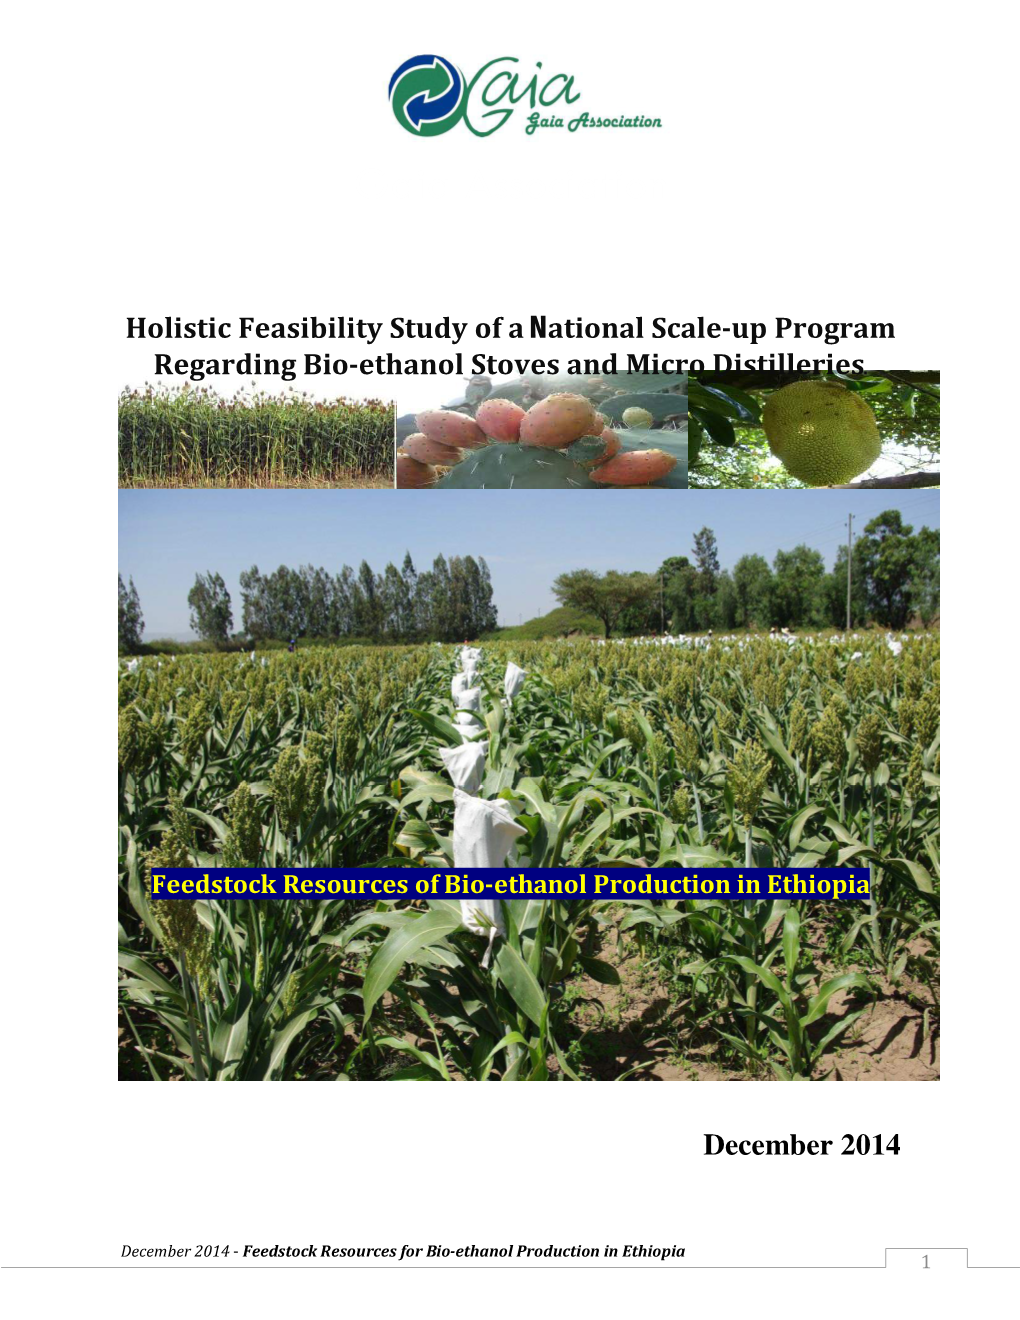 Feedstock Resources of Bio-Ethanol Production in Ethiopia